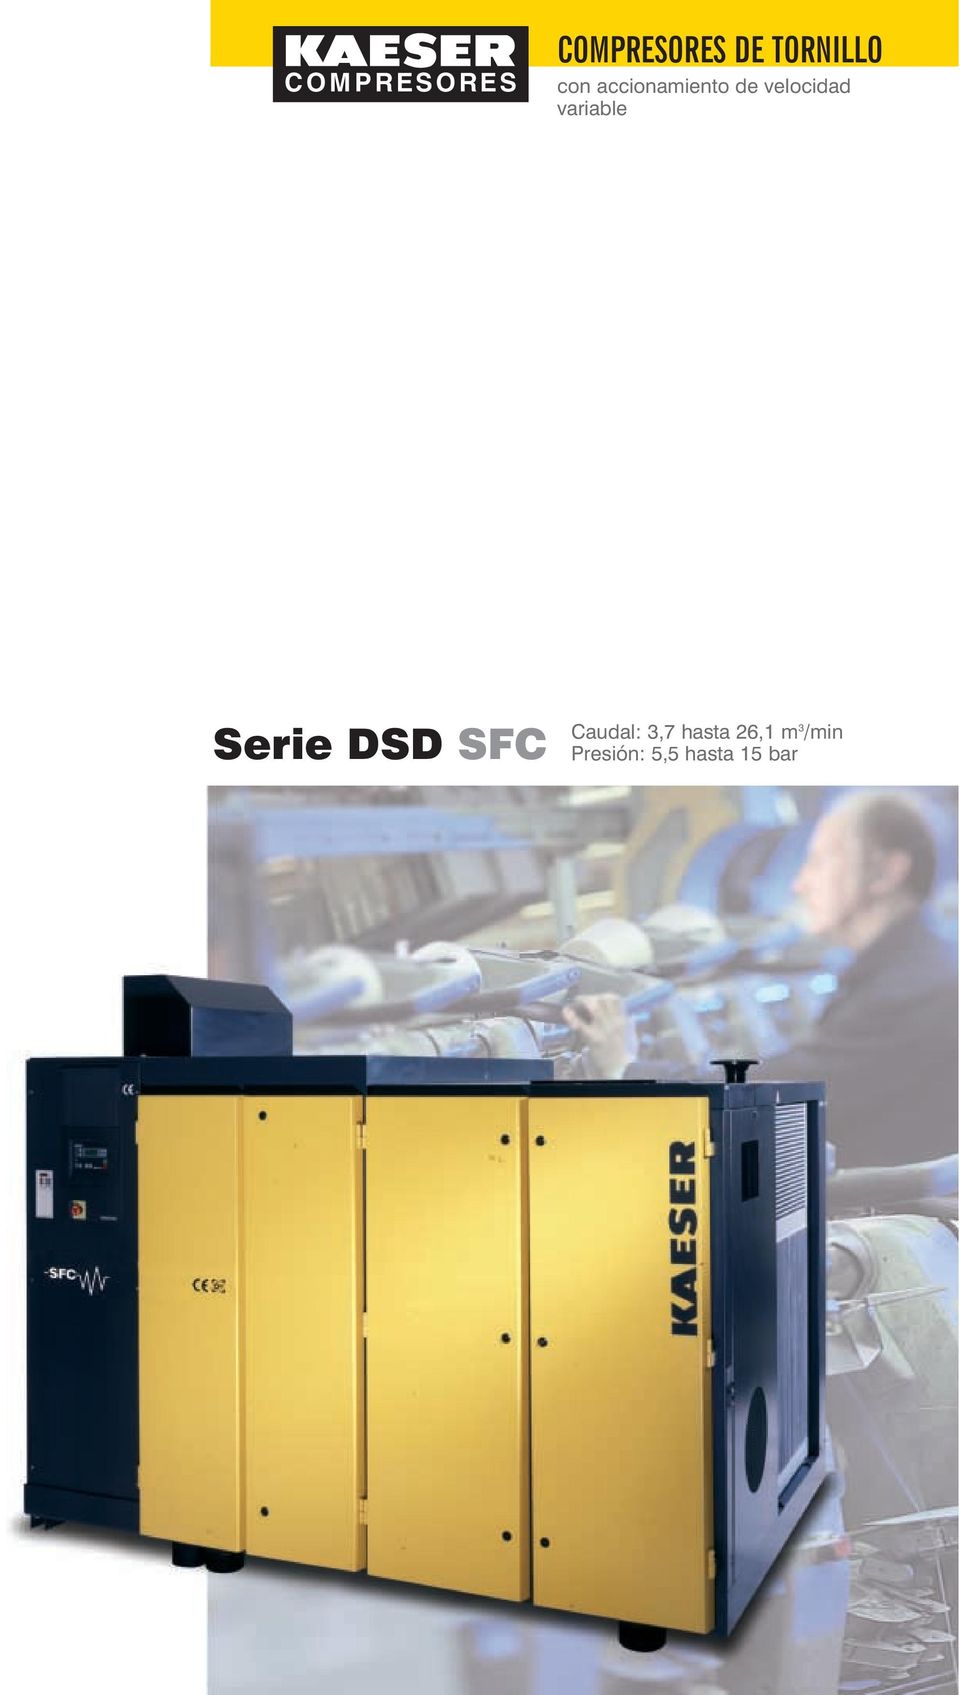 variable Serie DSD SFC